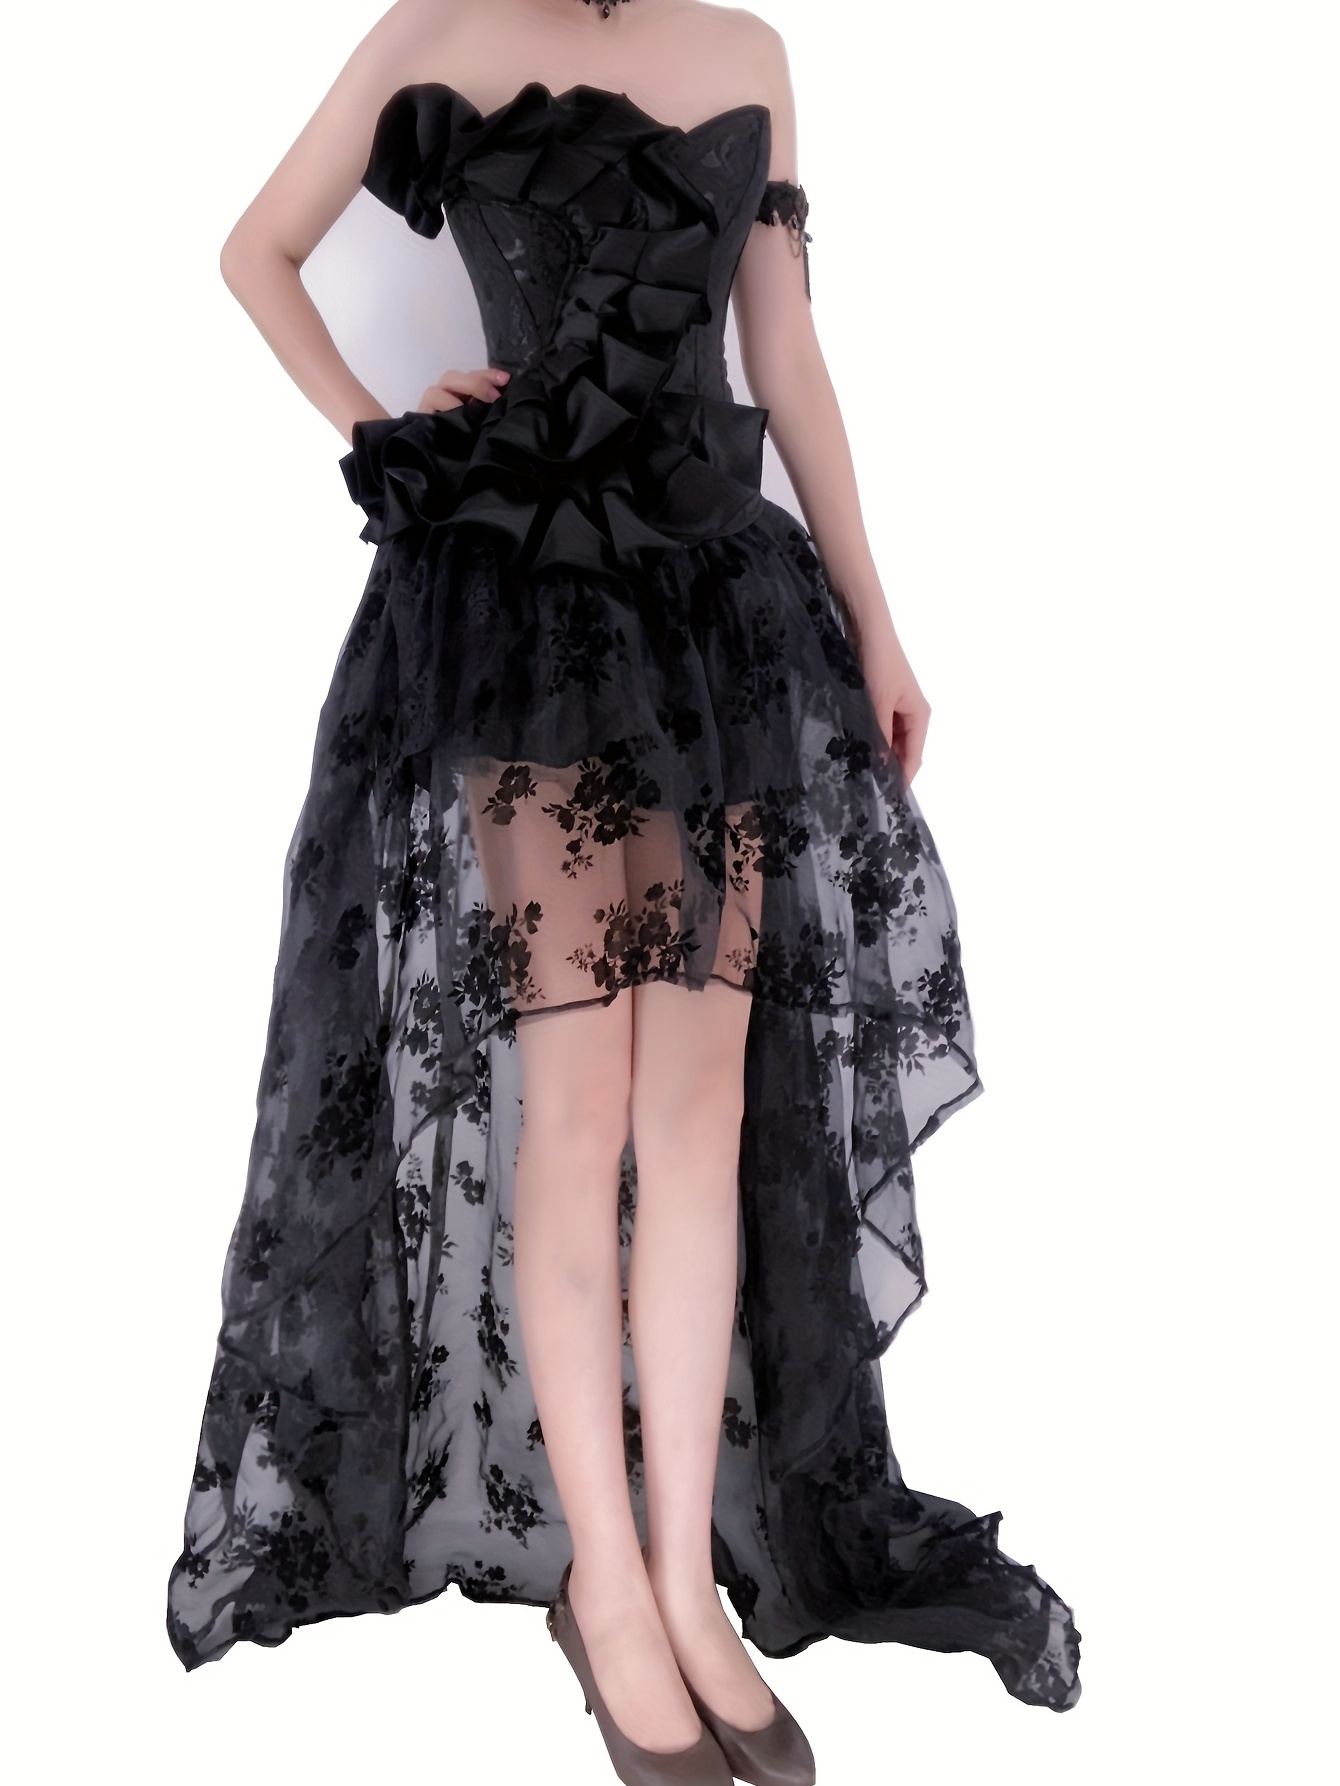 Goth Floral Lace Body Shaper Set, Ruffle Jacquard Lace Up Strapless Corset  & Mesh Skirt, Women's Lingerie & Shapewear